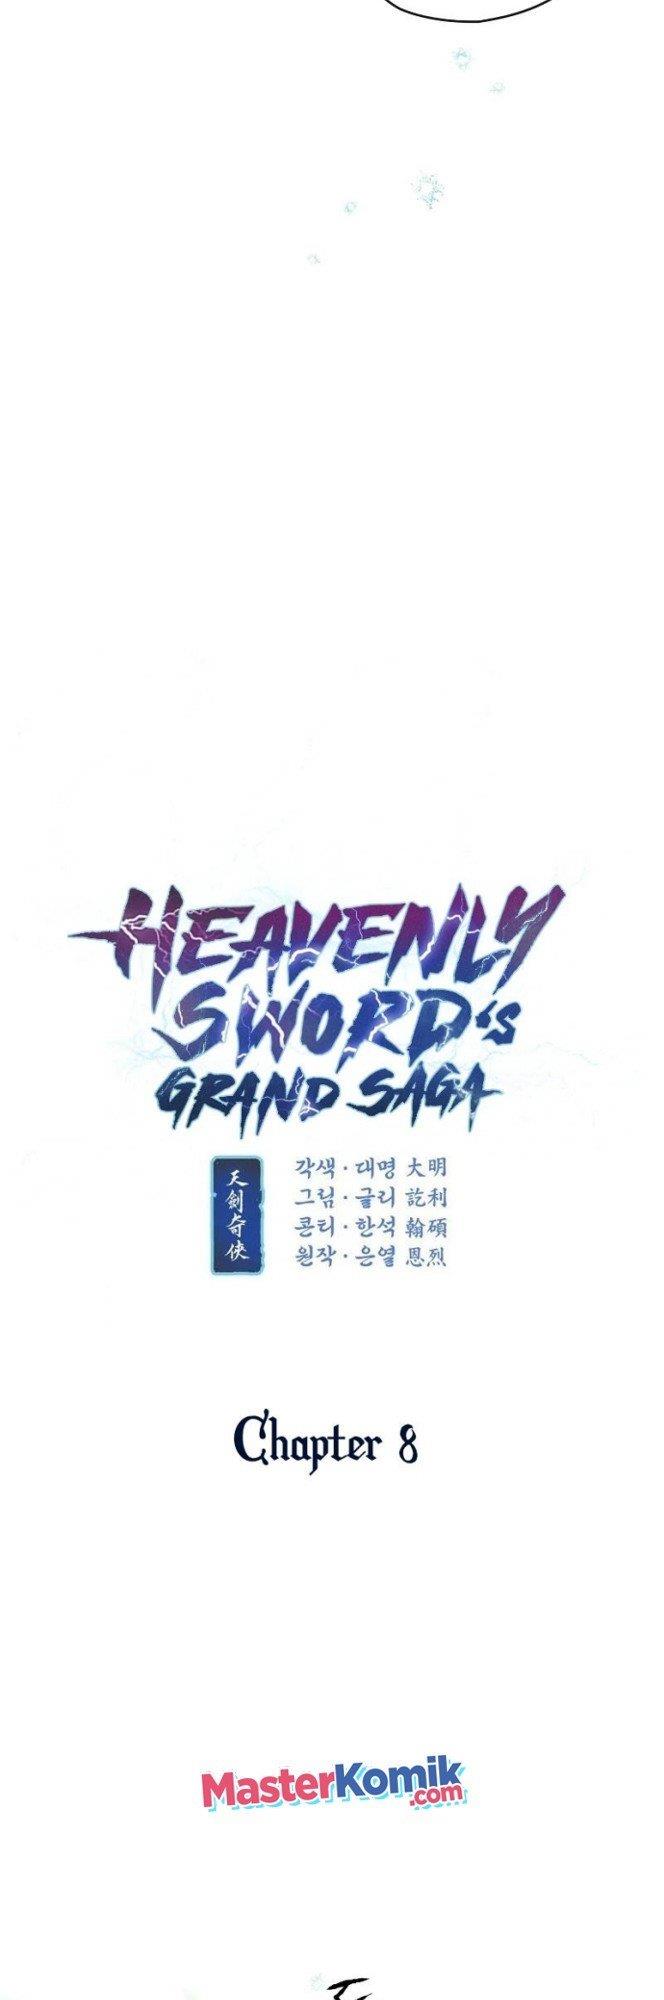 Heavenly Sword’s Grand Saga Chapter 8